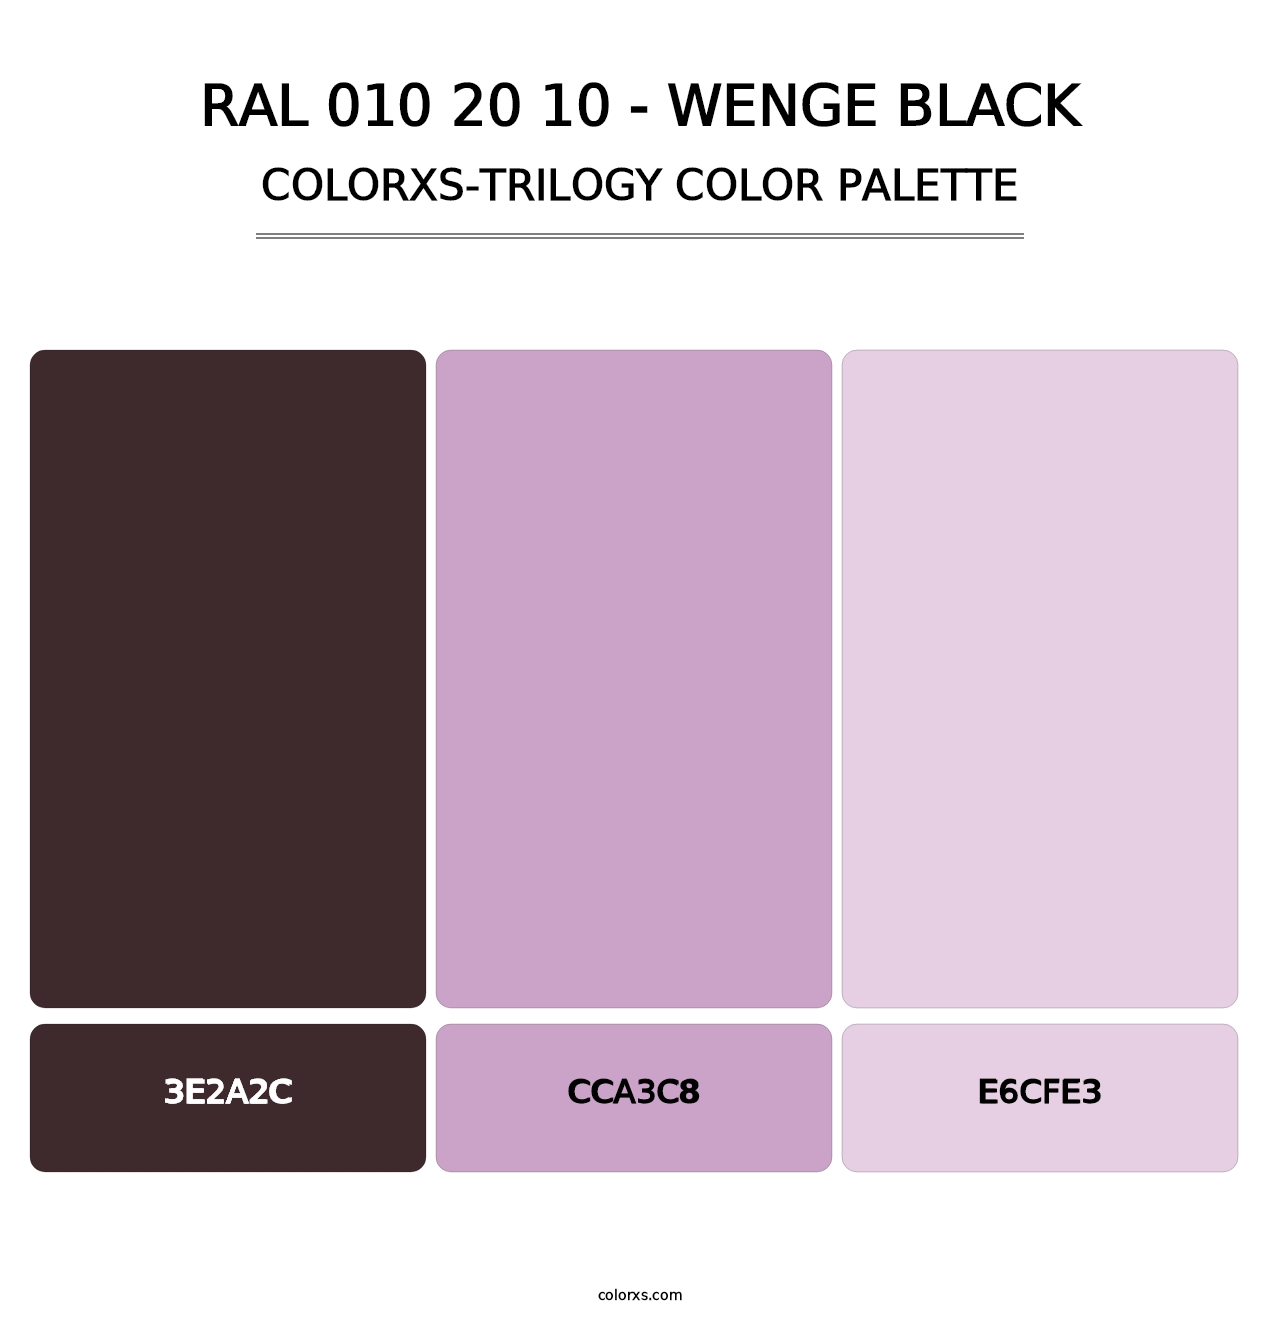 RAL 010 20 10 - Wenge Black - Colorxs Trilogy Palette